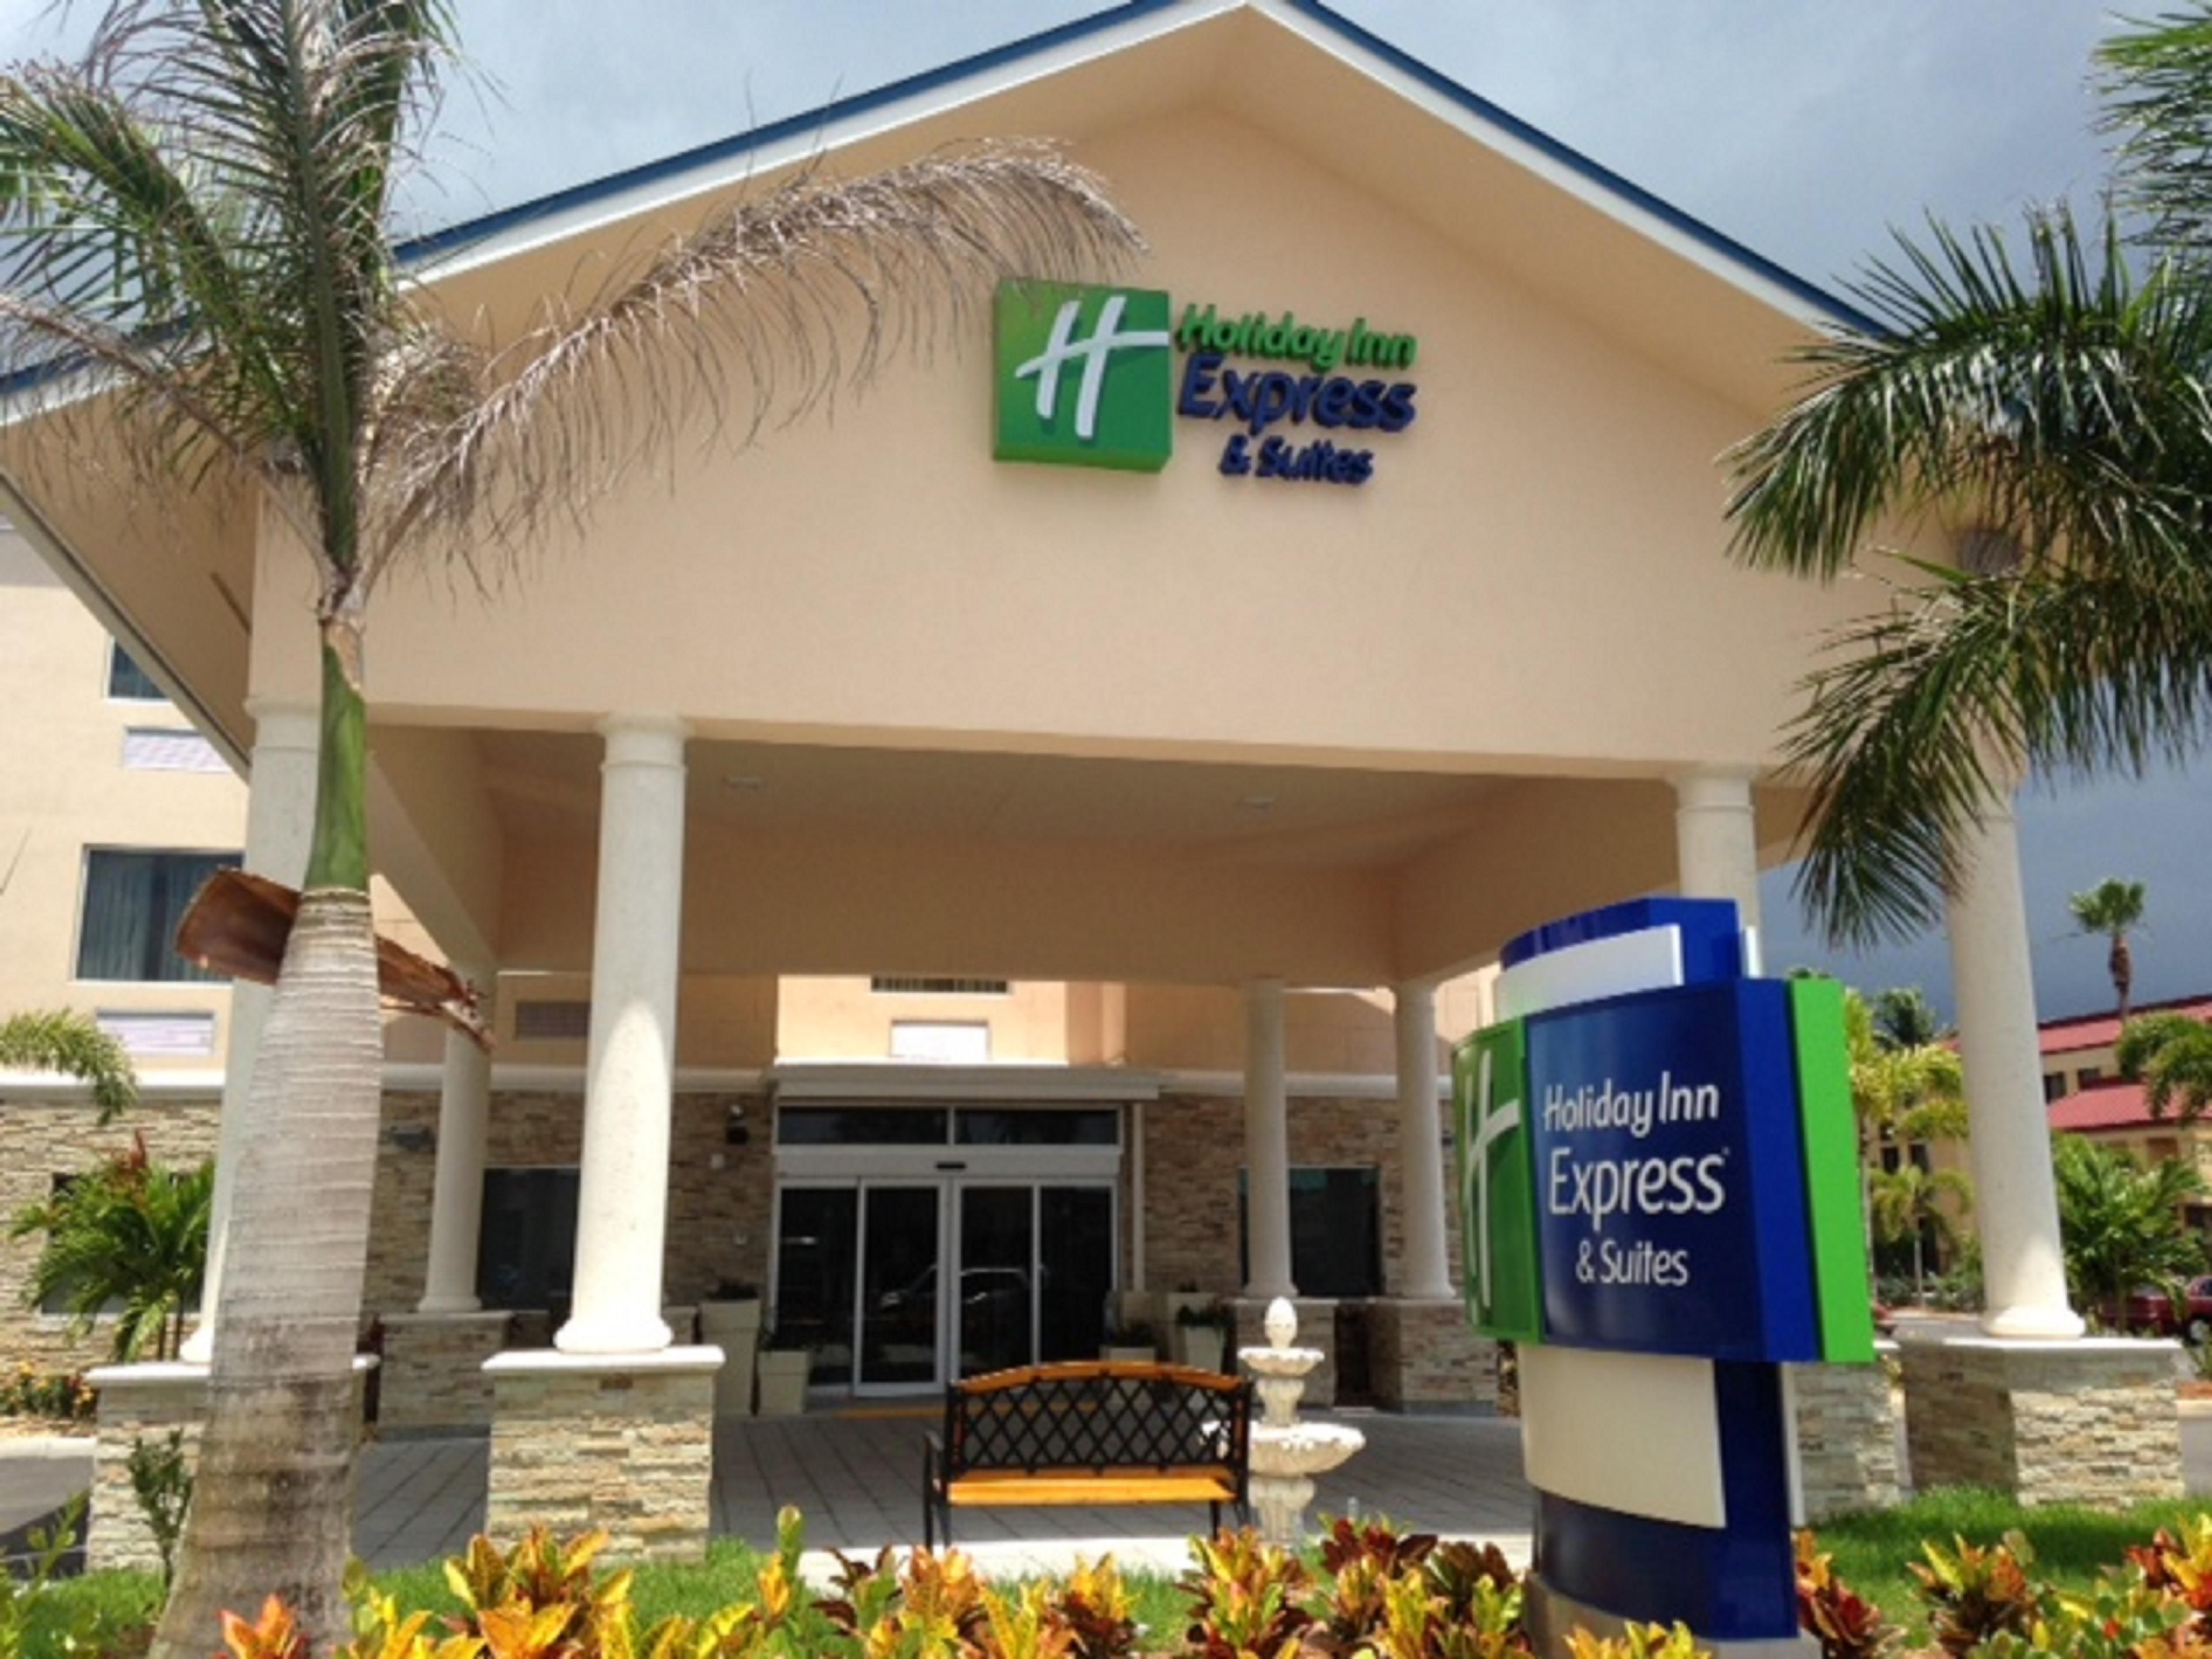 Find West Palm Beach Hotels Top 8 Hotels In West Palm Beach Fl